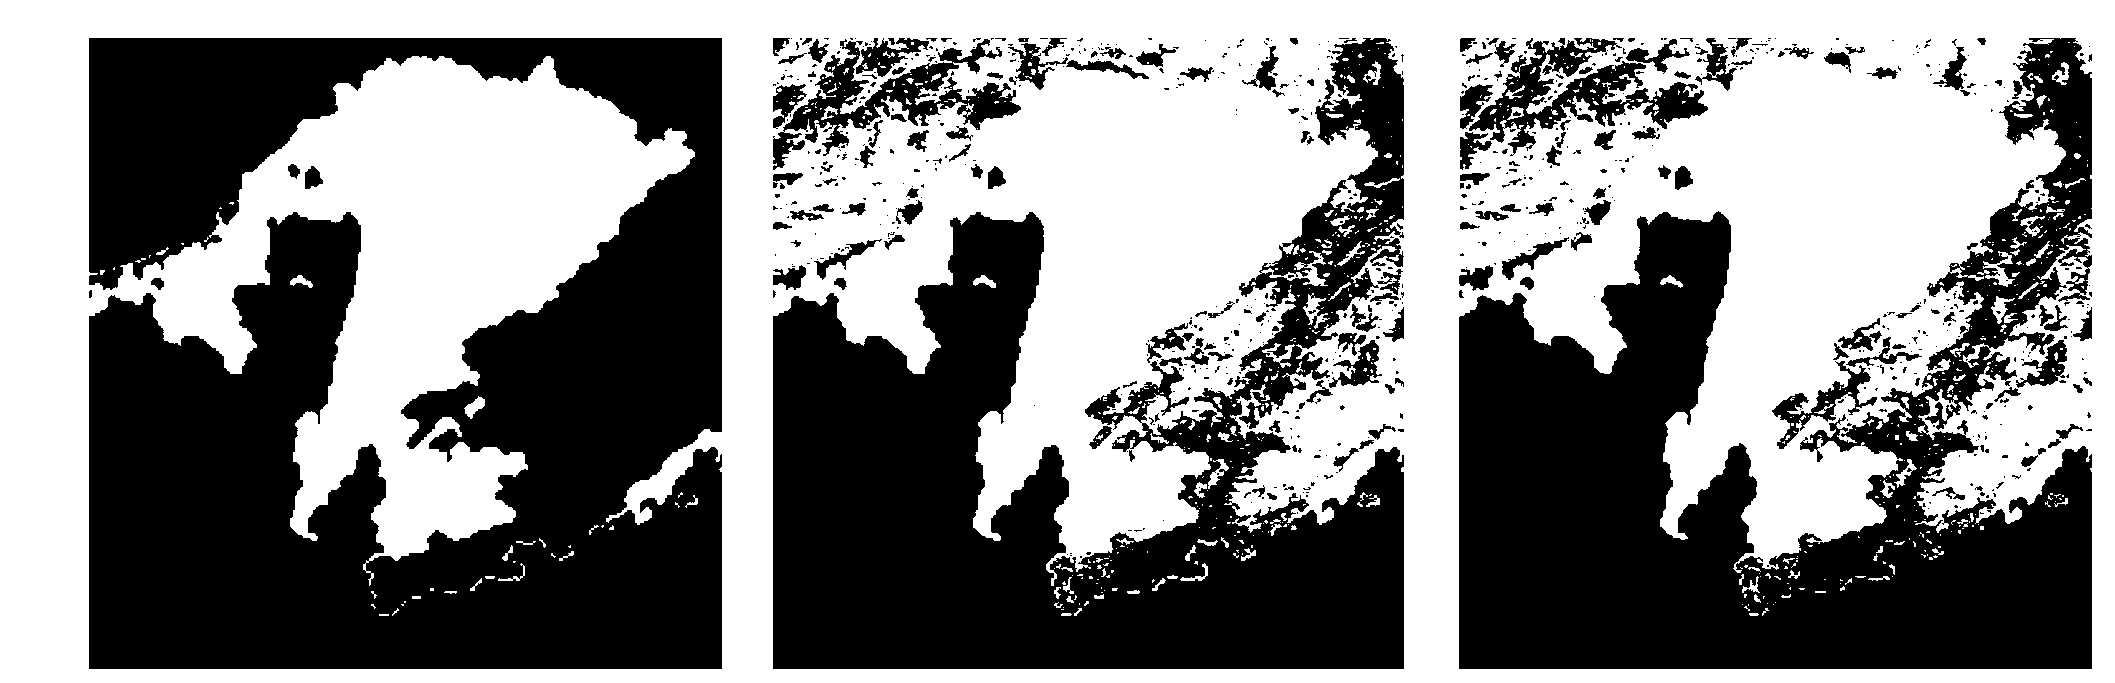 Sea ice parameter extraction method on basis of satellite image